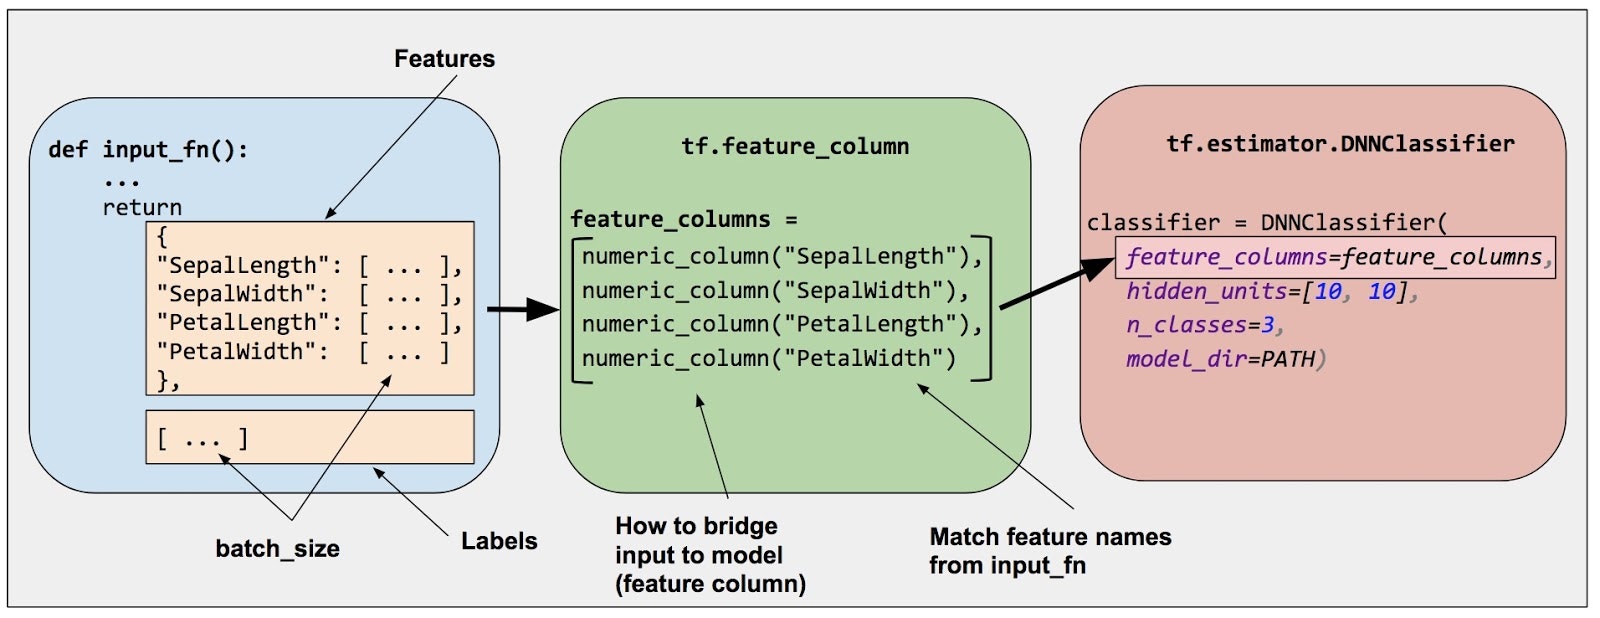 inputs_to_model_bridge.jpg